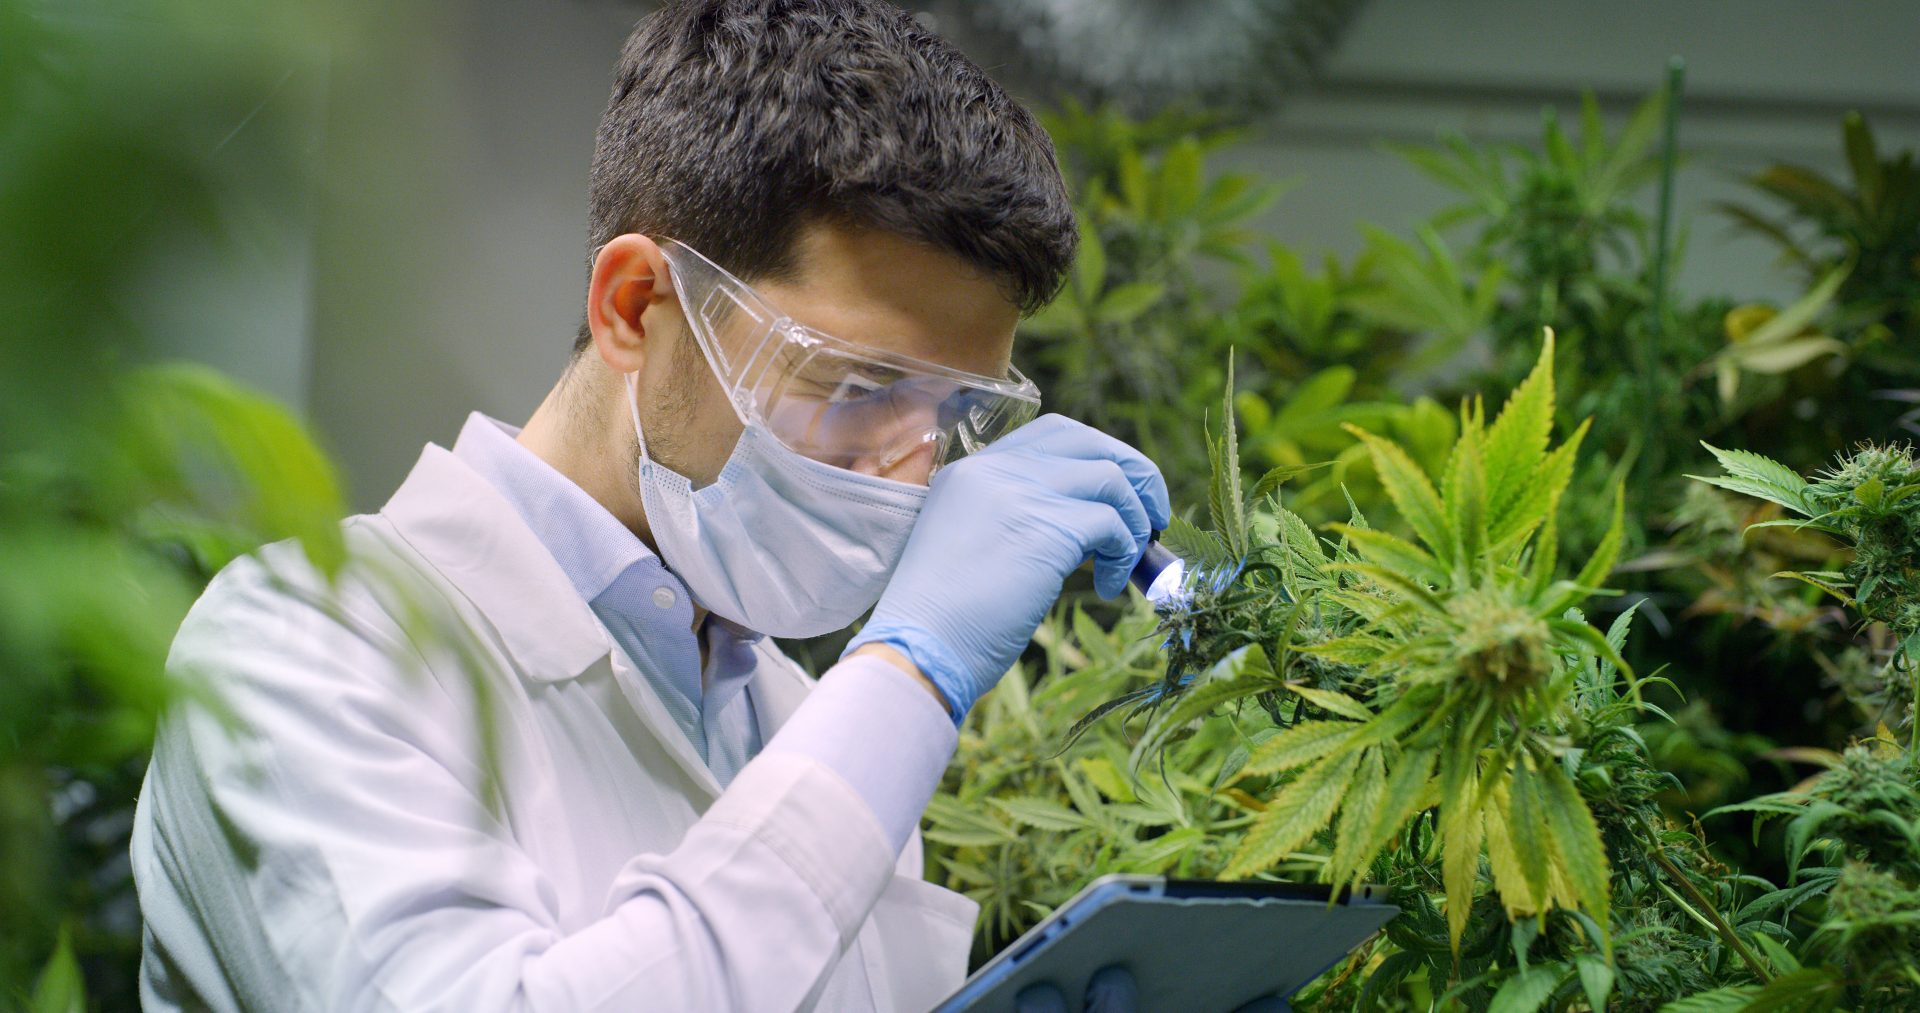 Kush Inspector, inspecting growing Cannabis plants